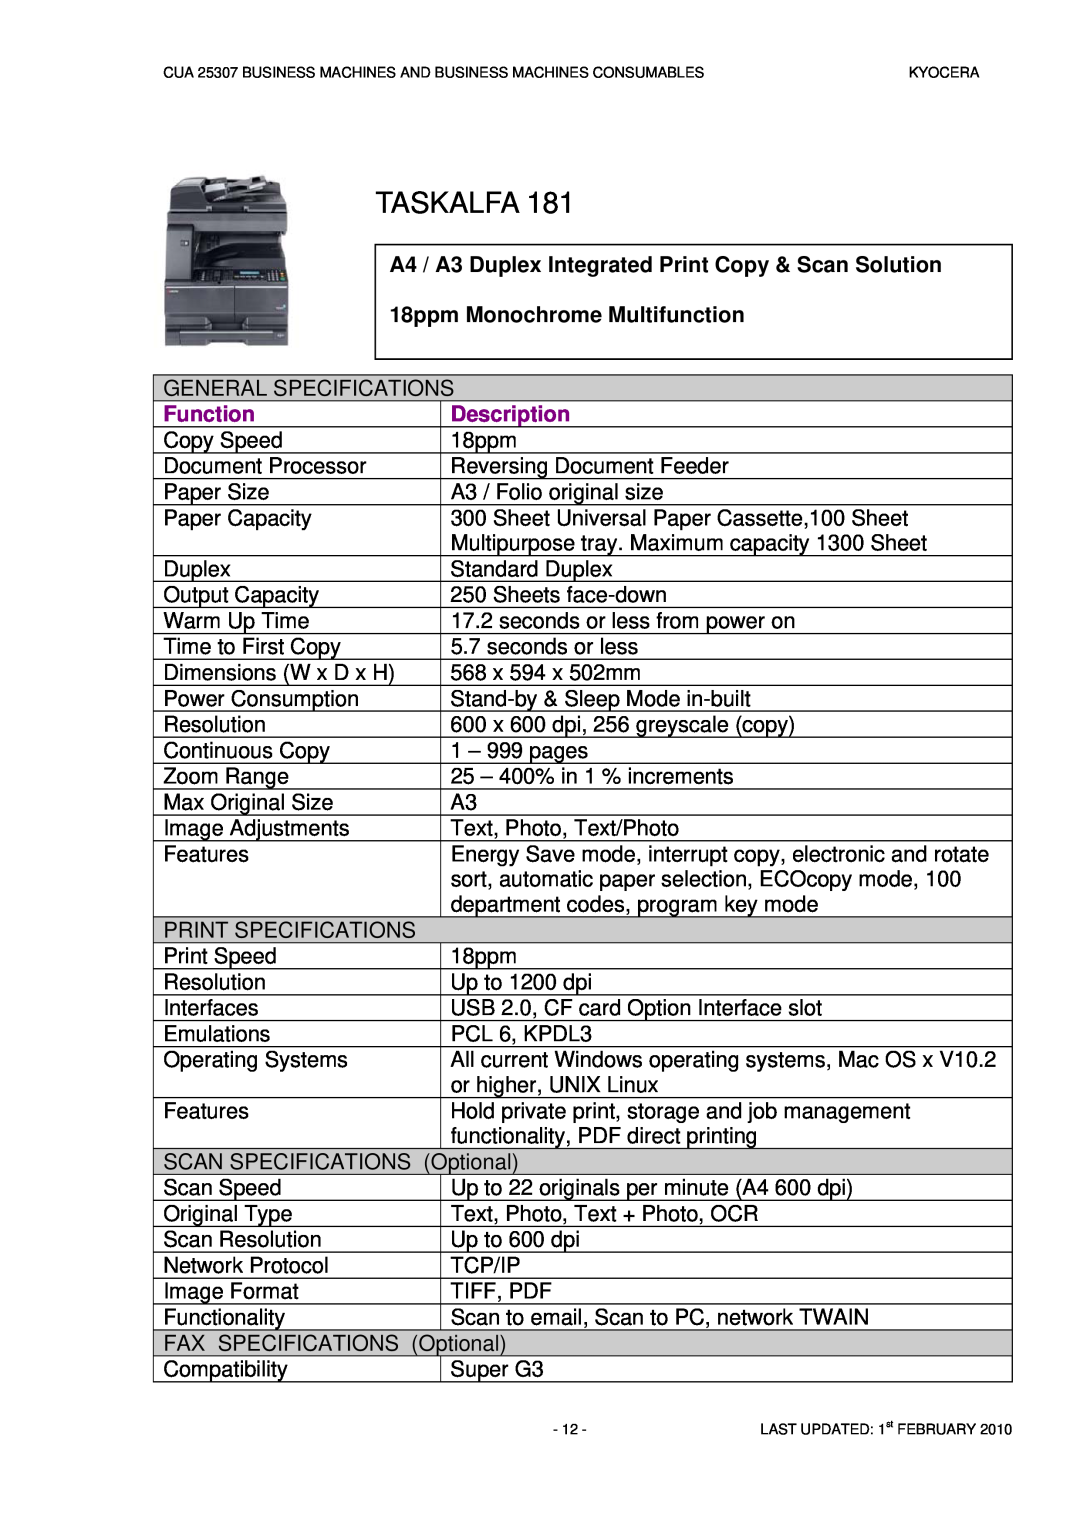 Kyocera CUA 25307 manual Taskalfa, 18ppm Monochrome Multifunction, Description 18ppm 